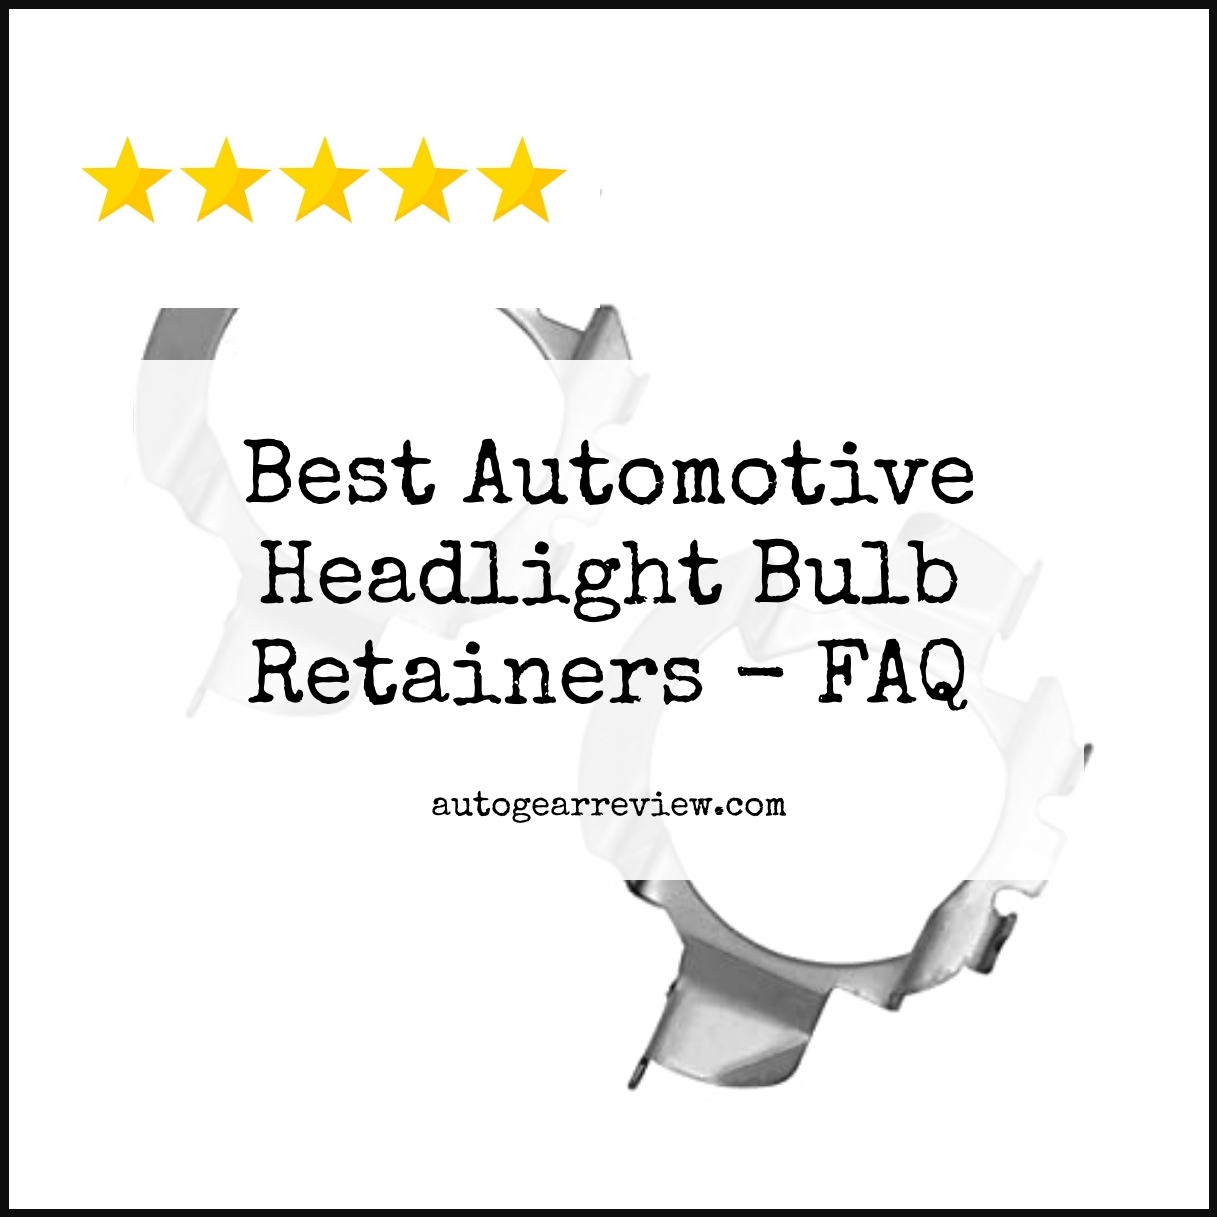 Best Automotive Headlight Bulb Retainers - FAQ